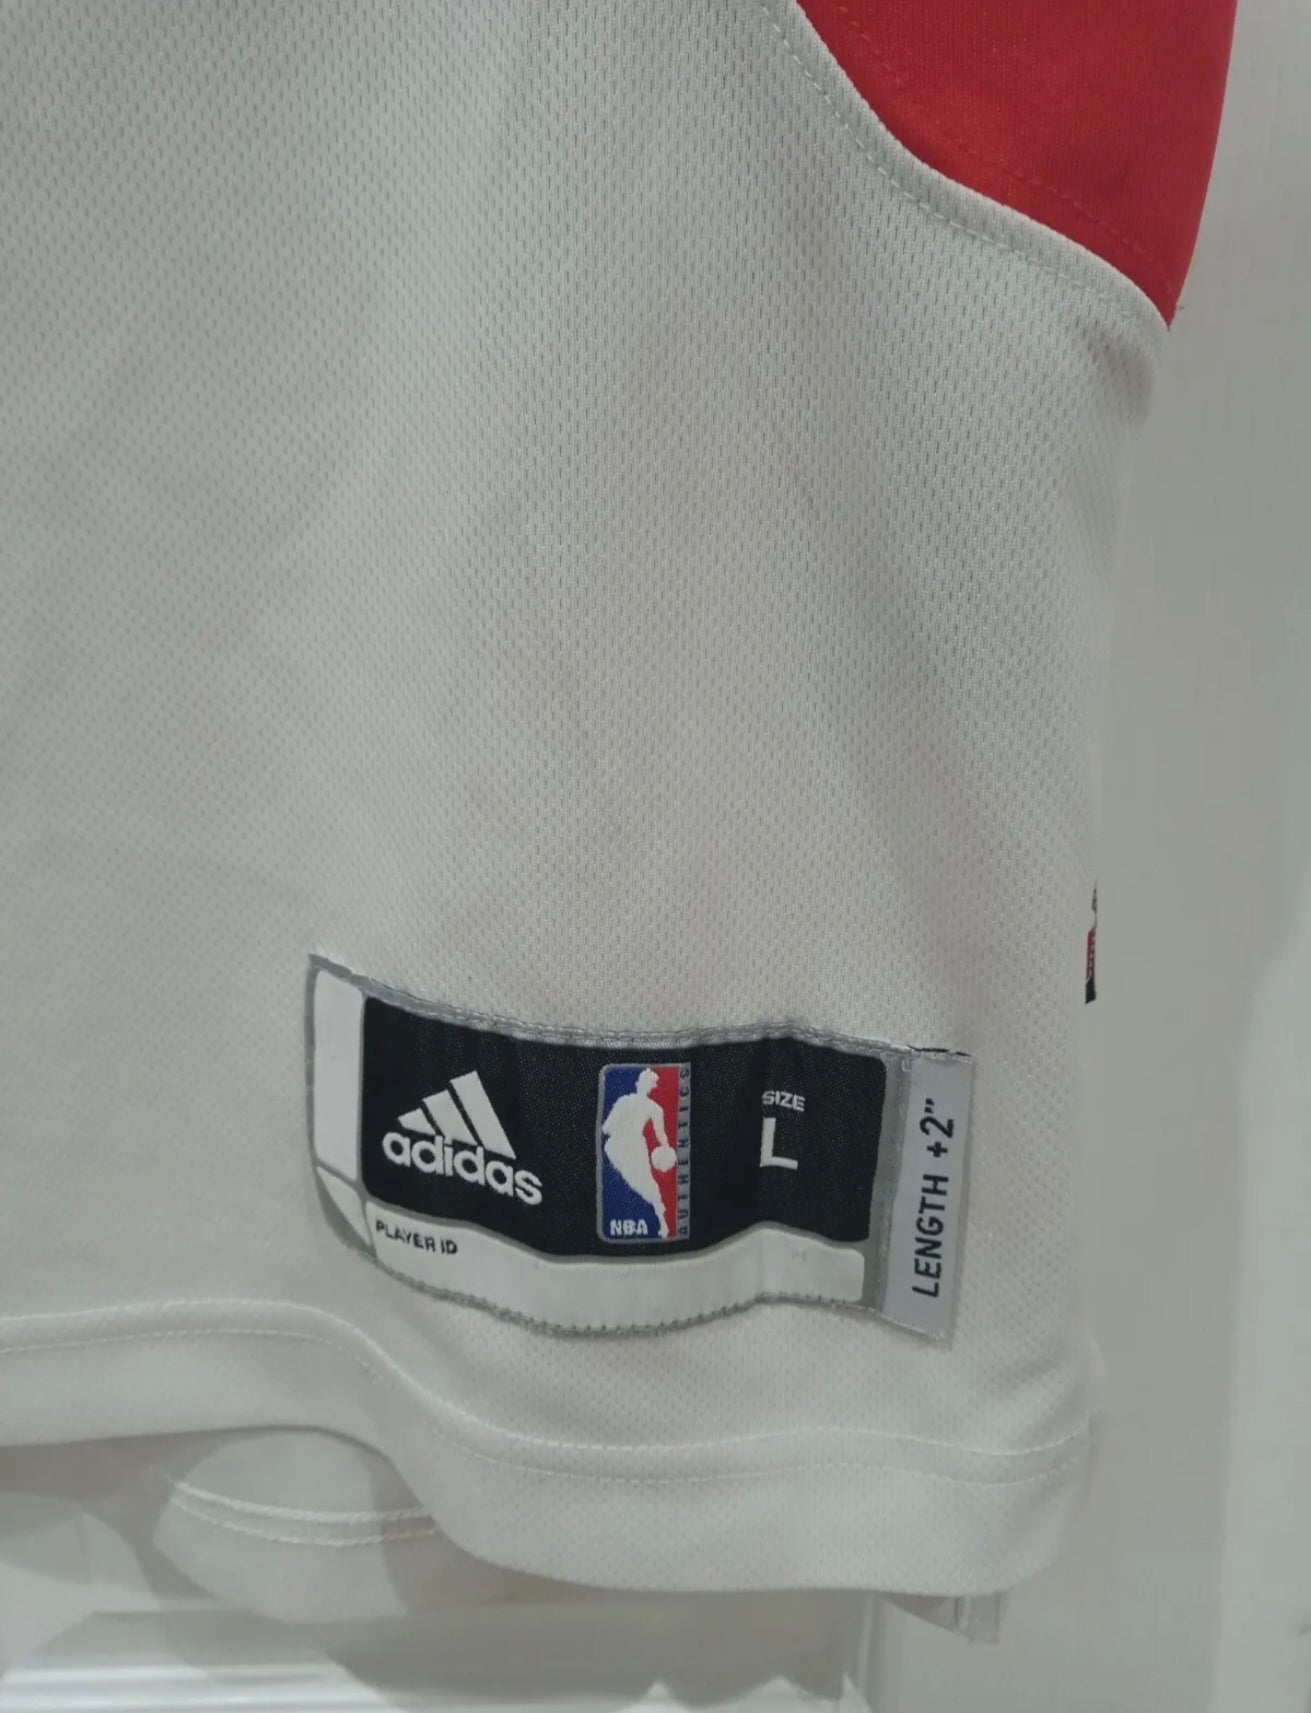 Adidas Houston Rockets NBA Basketball jersey, #12 Howard, white/red, size Large